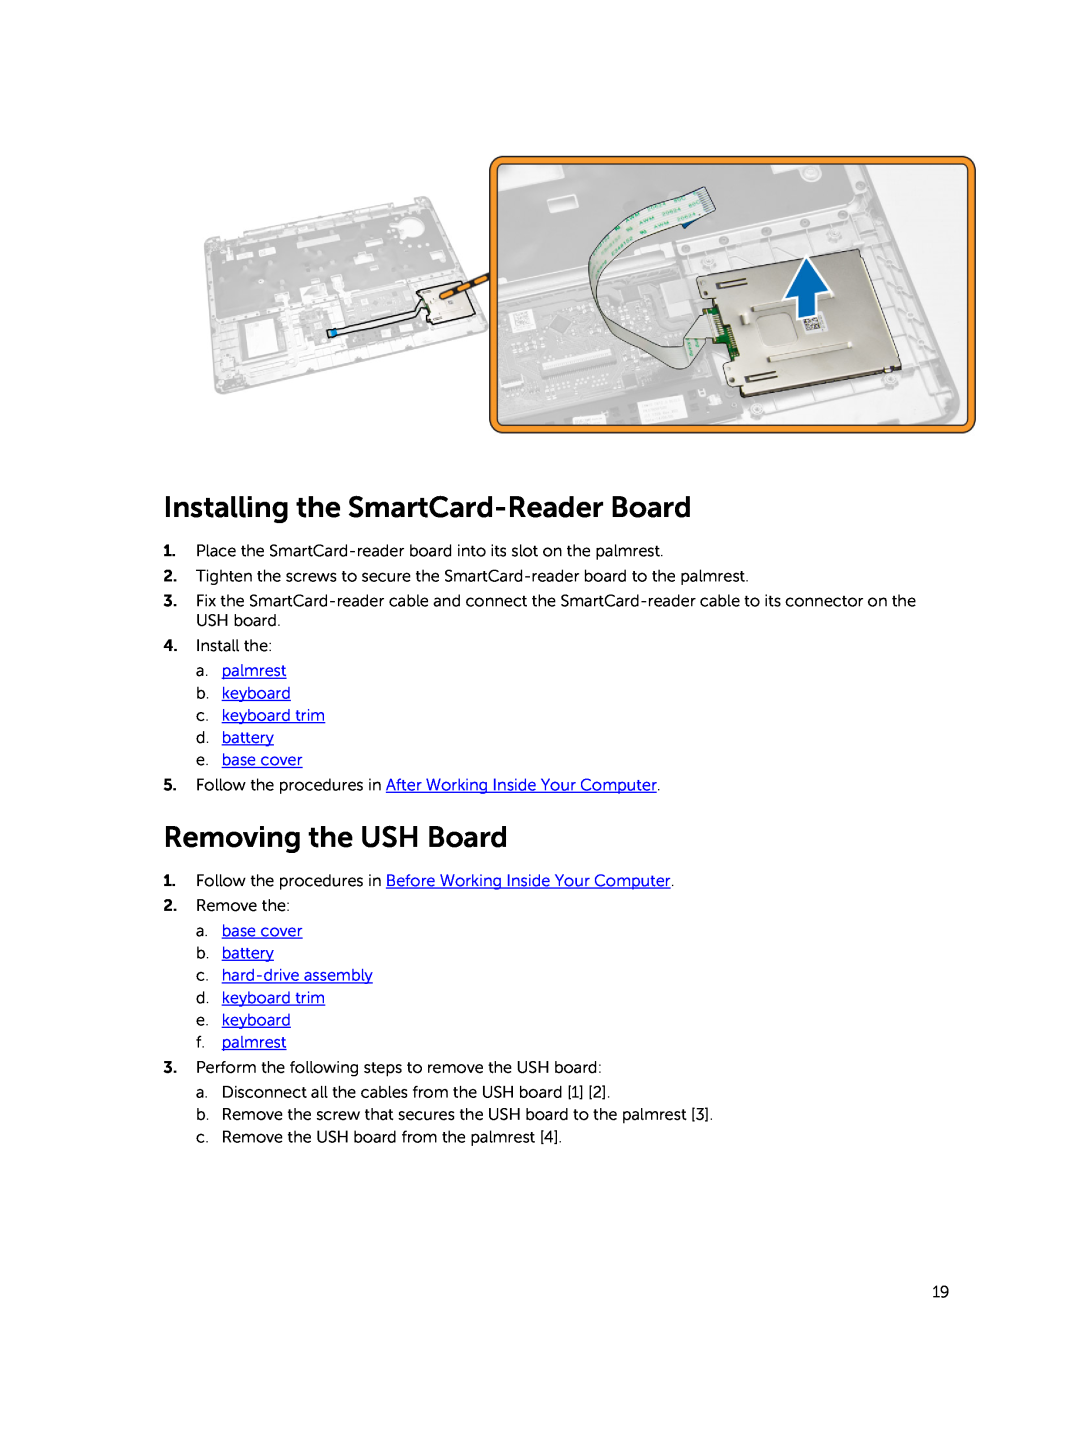 Dell E5450 owner manual Installing the SmartCard-Reader Board, Removing the USH Board 